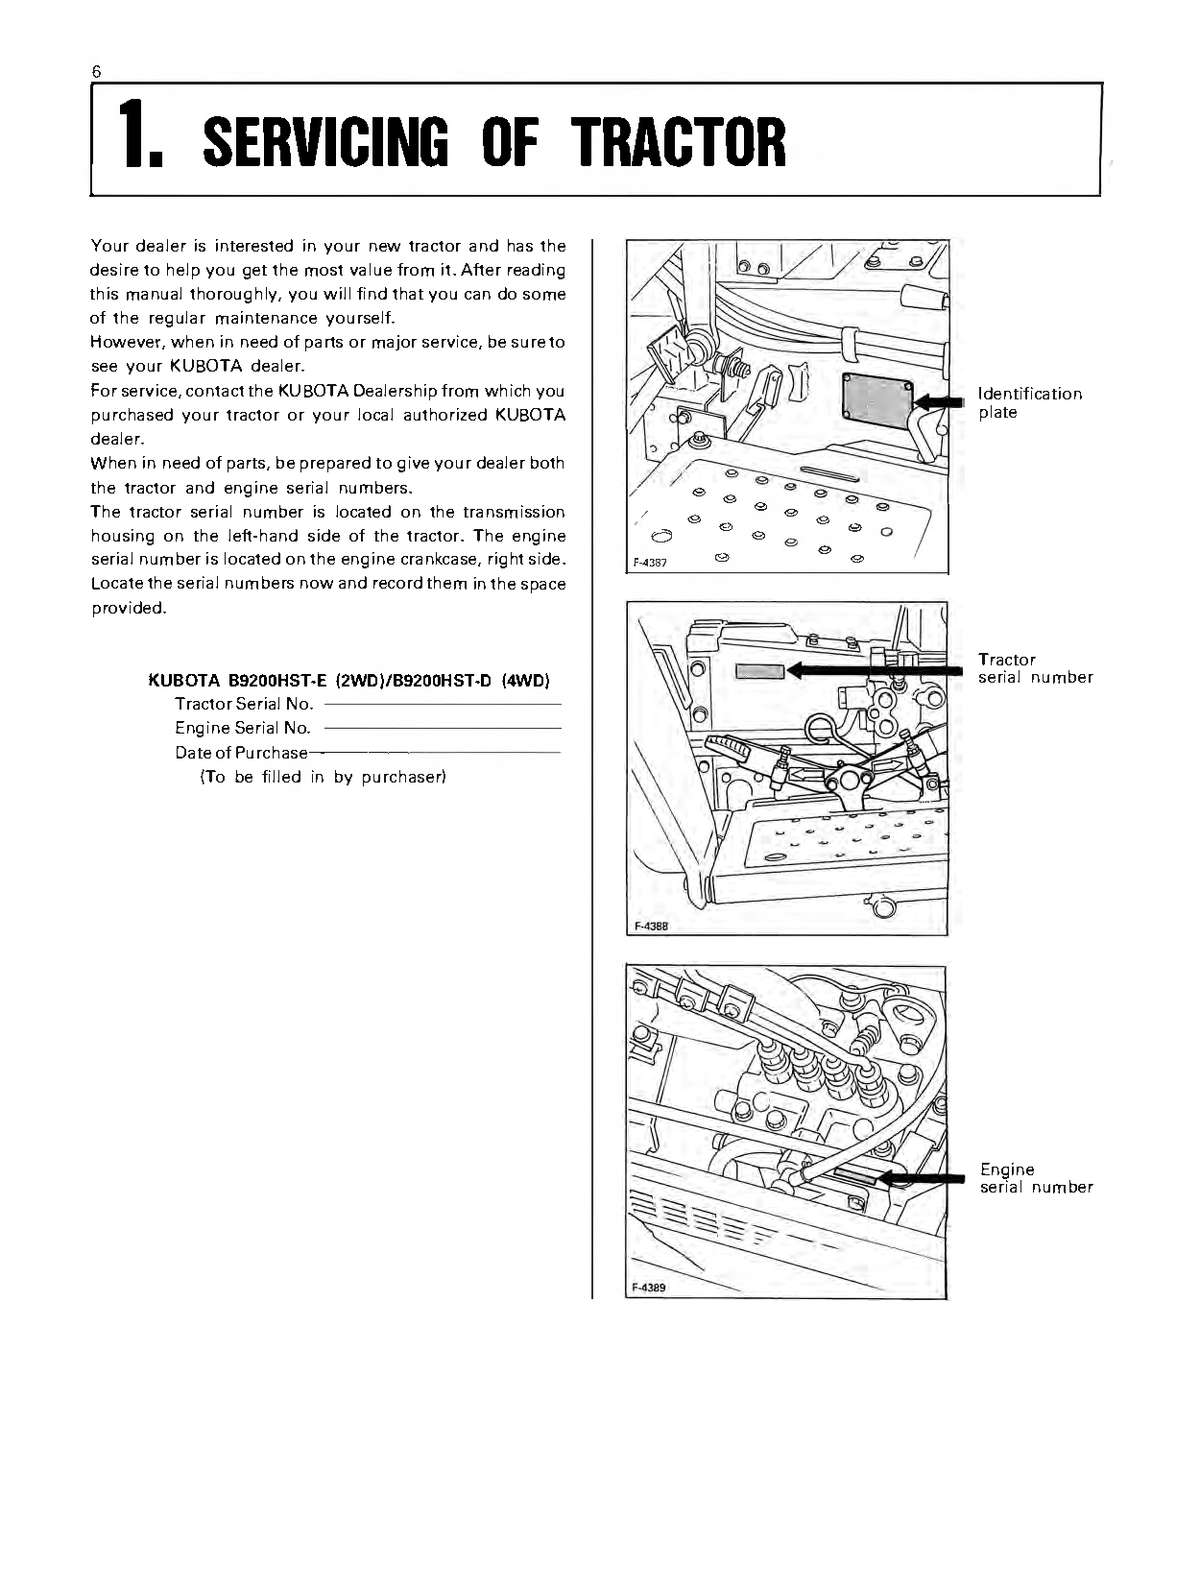 Kubota Tractor B9200HST Operator's Manual